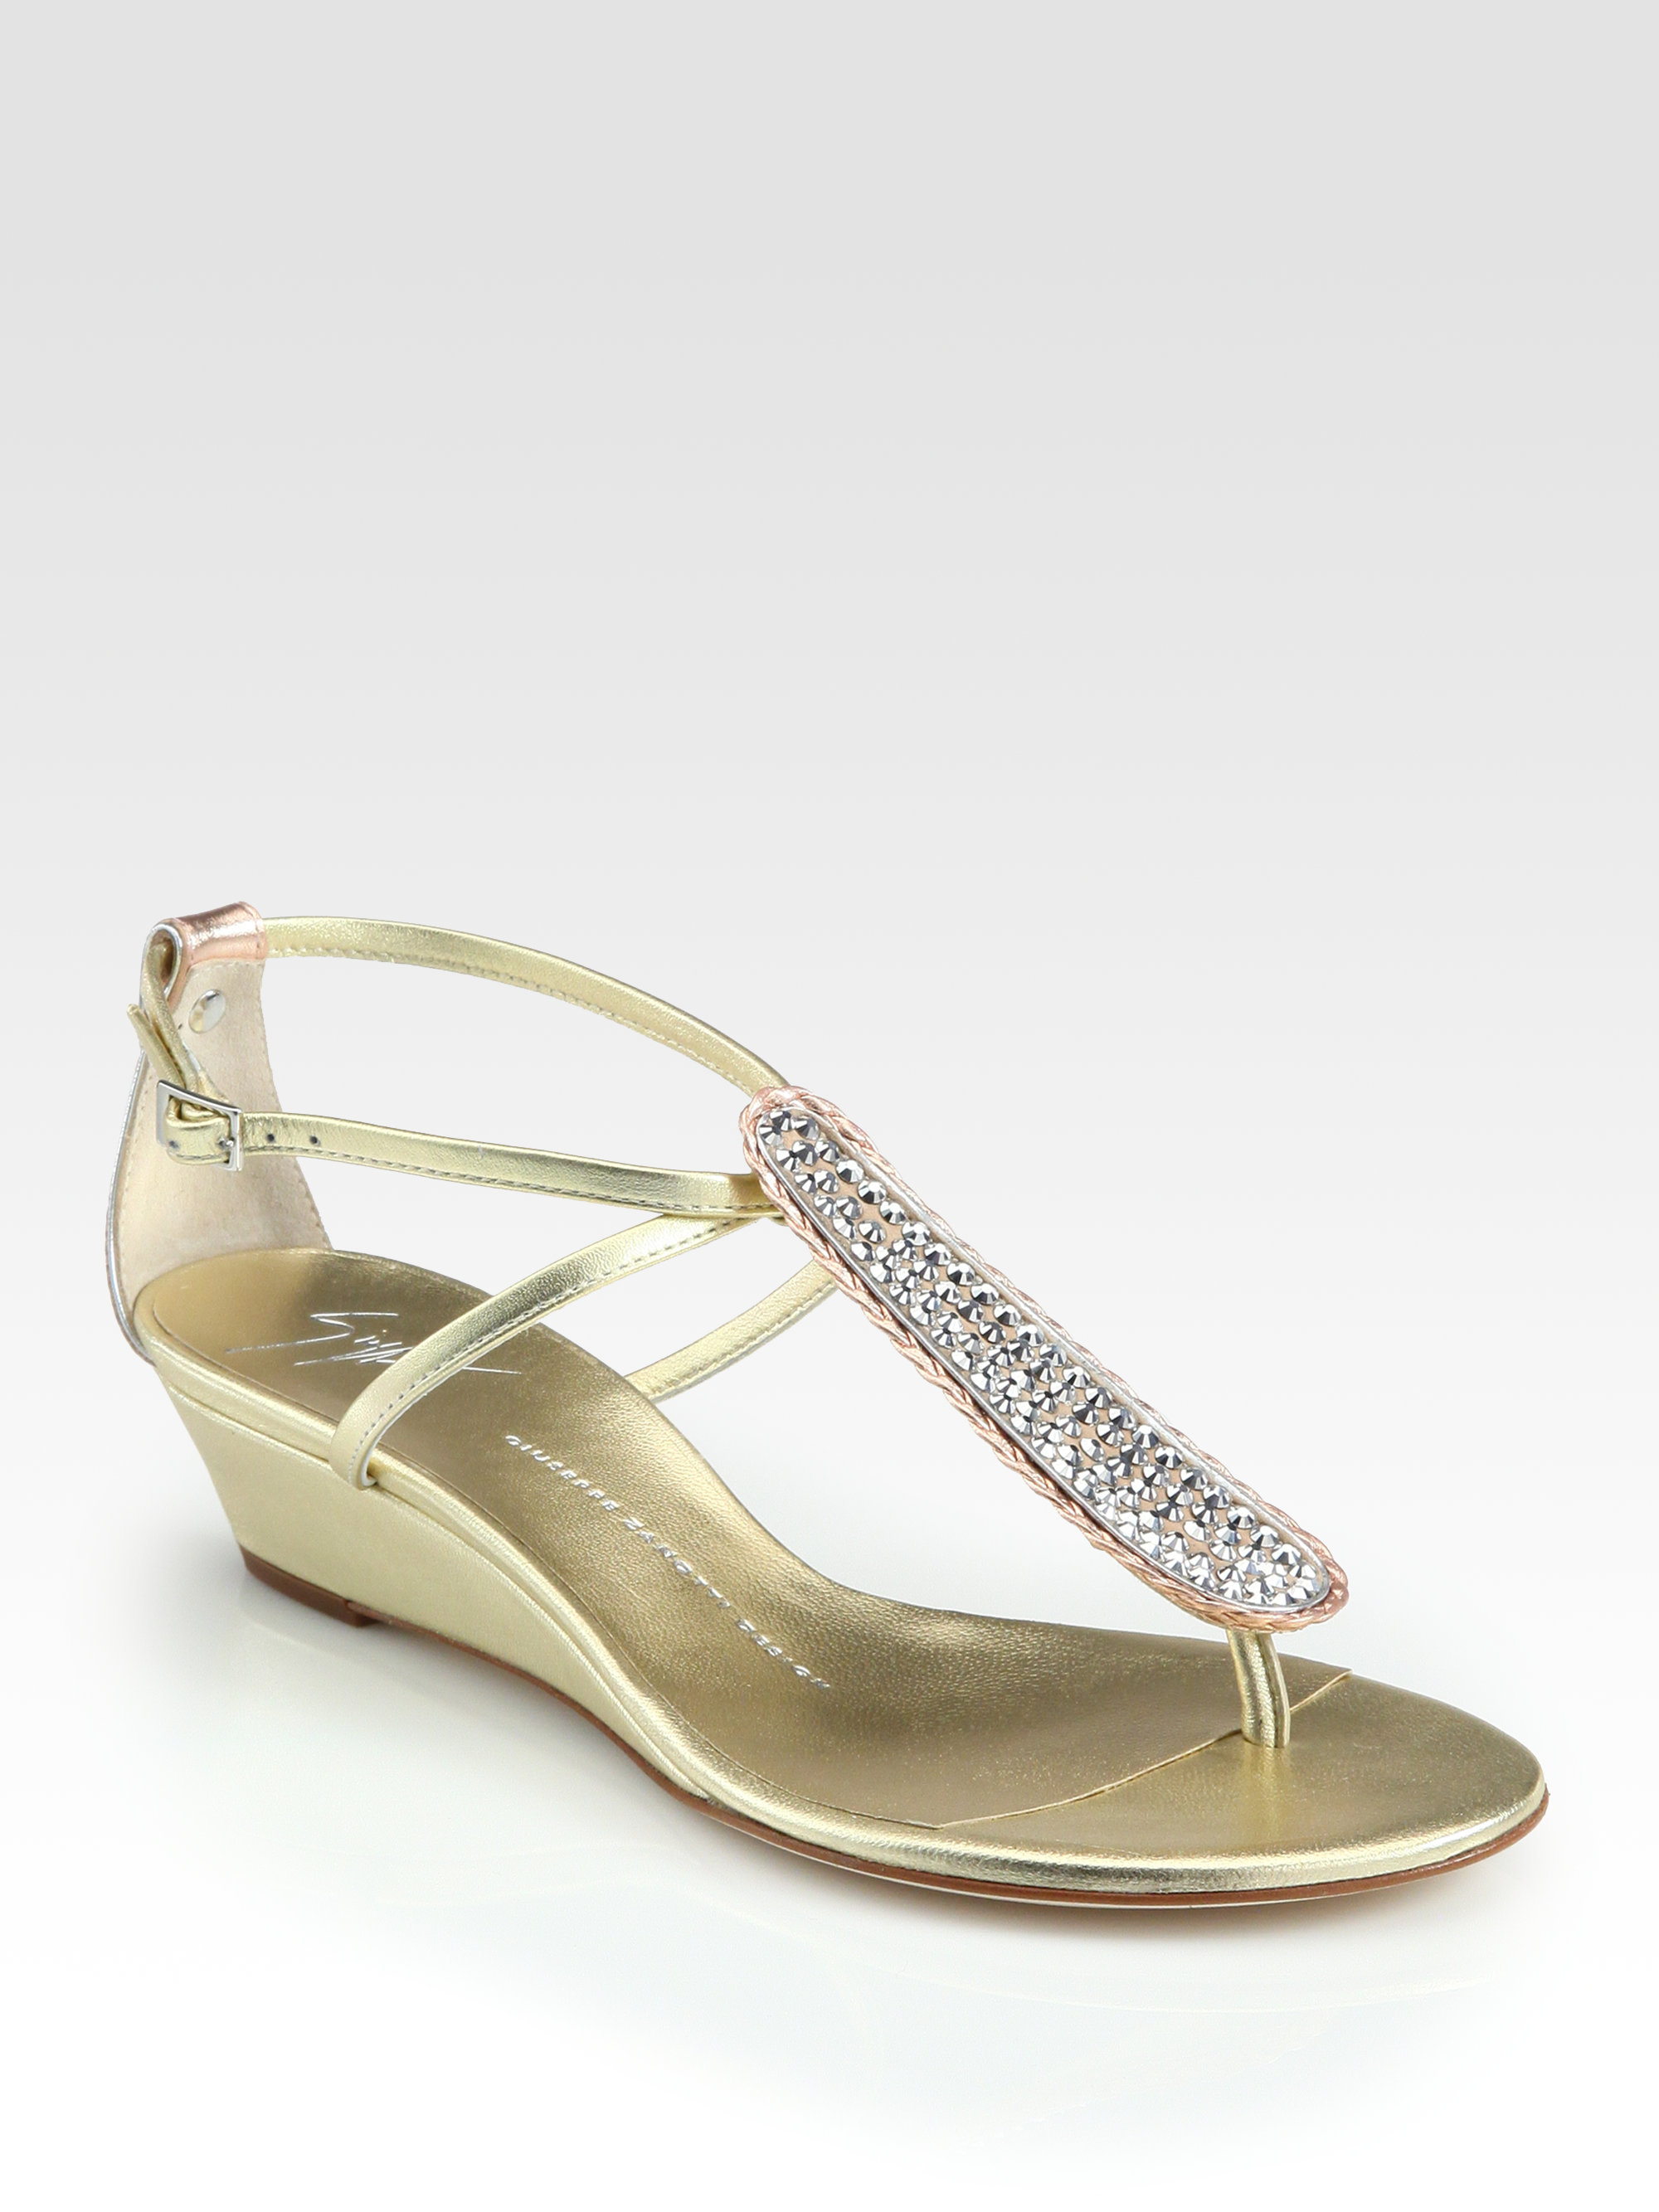 Giuseppe Zanotti Crystalcoated Metallic Leather Wedge Sandals in Gold ...